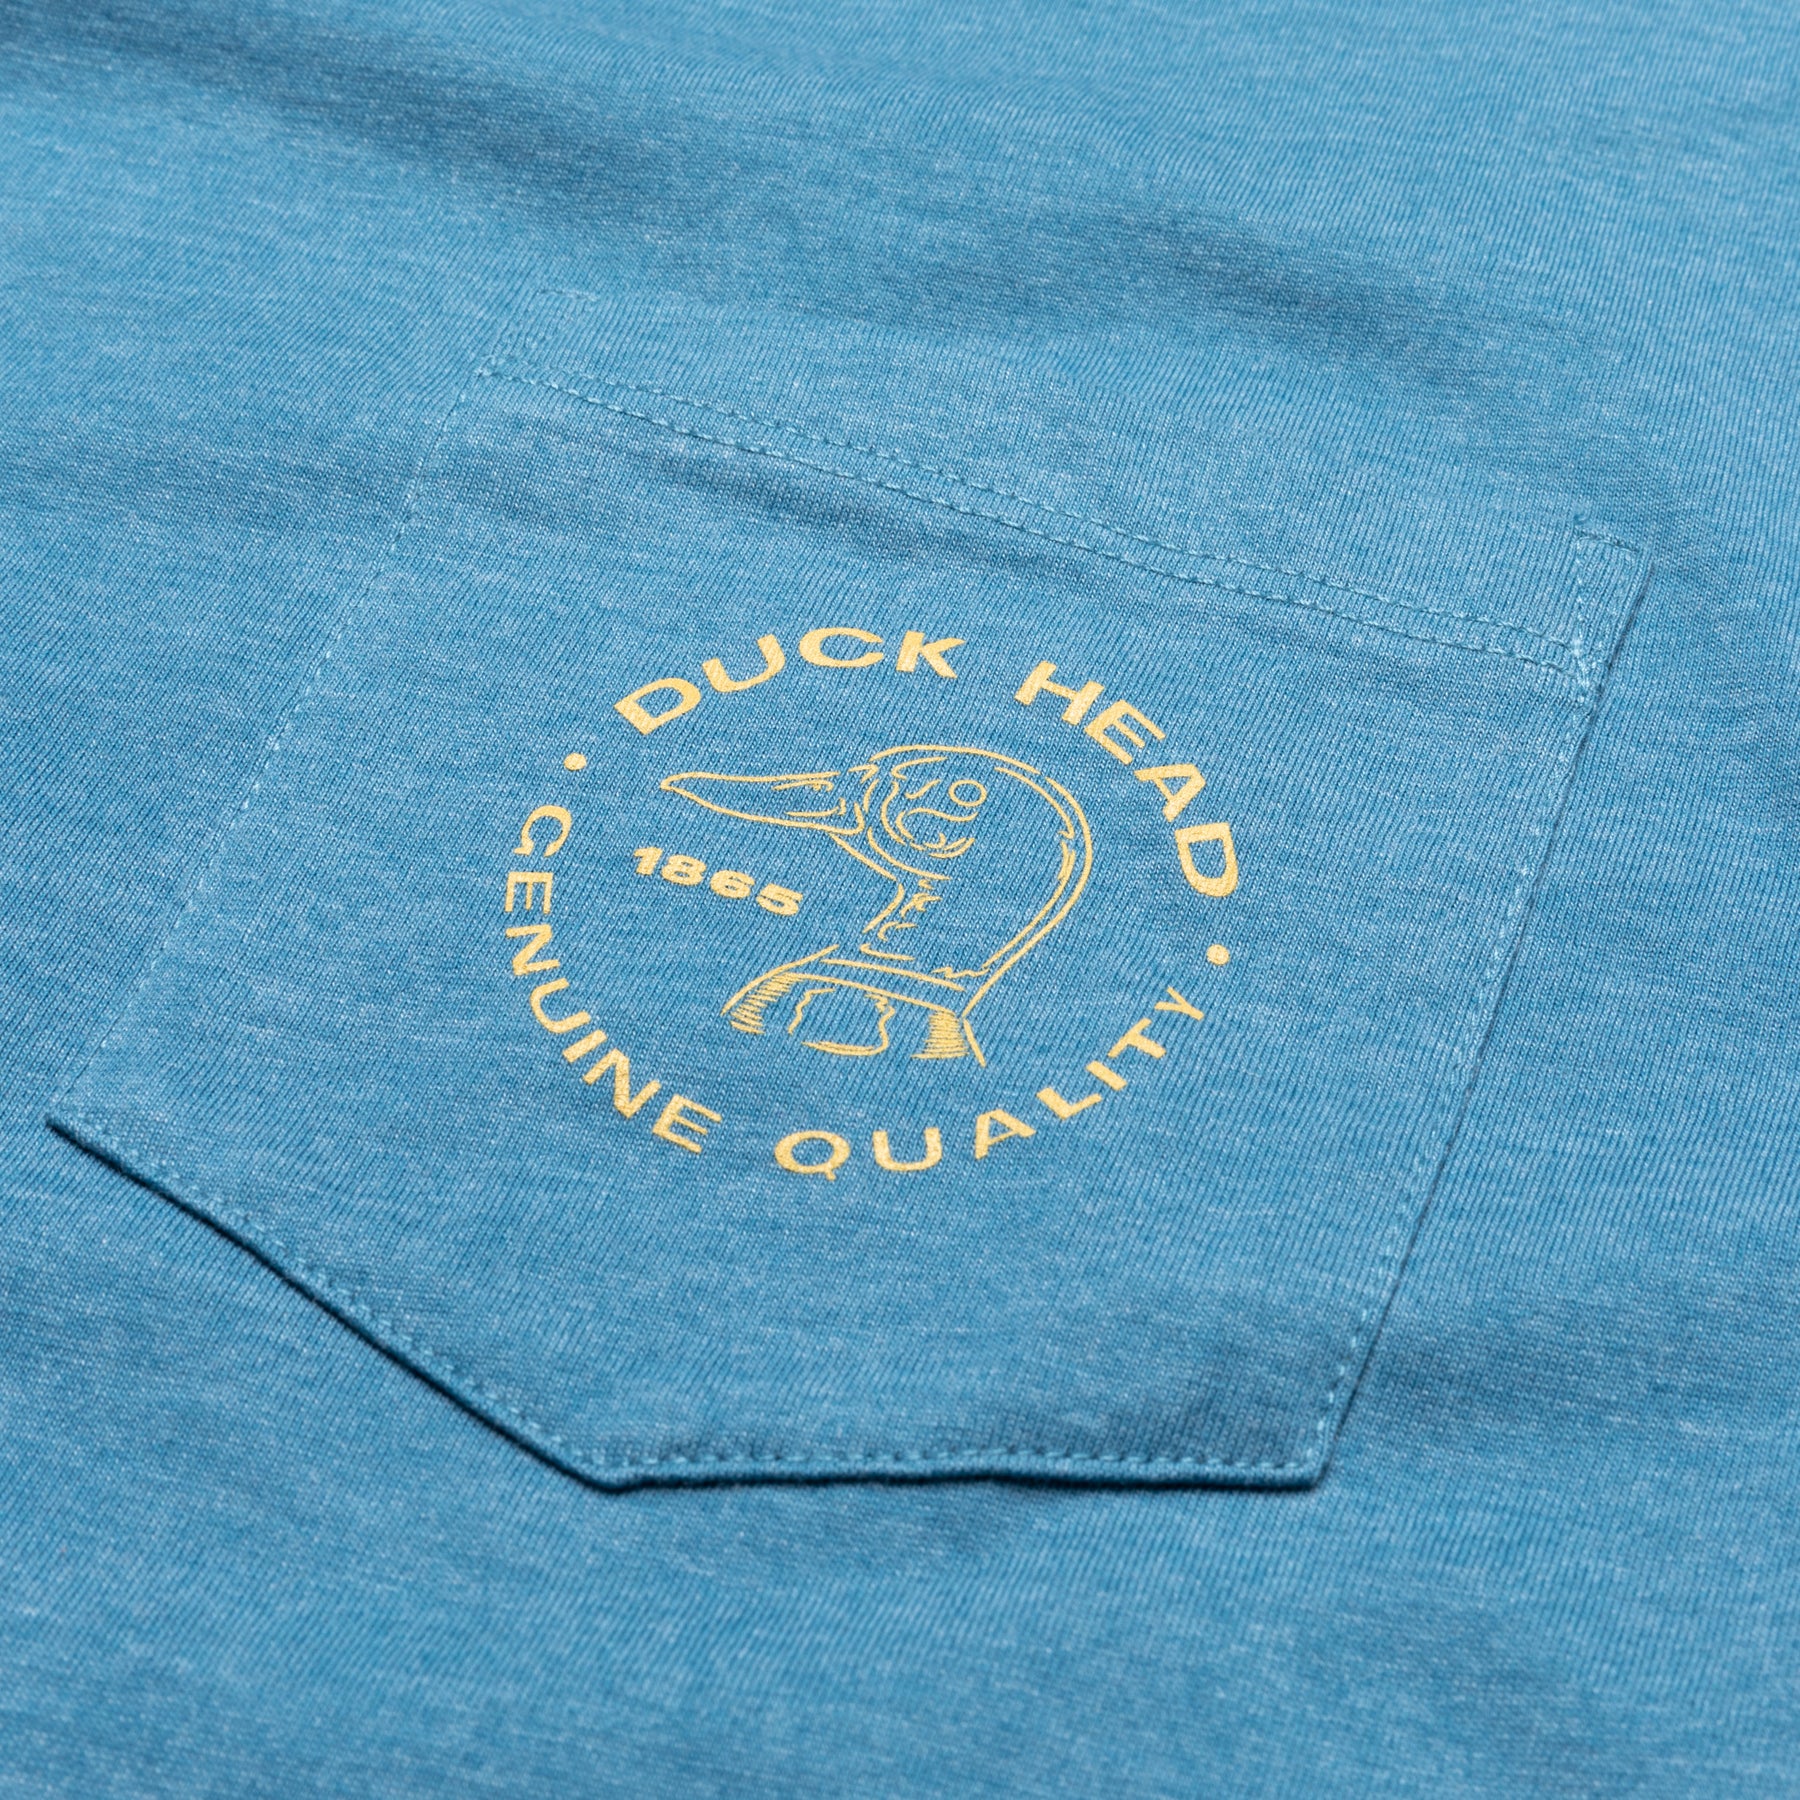 Shirts & Outerwear – Duck Head